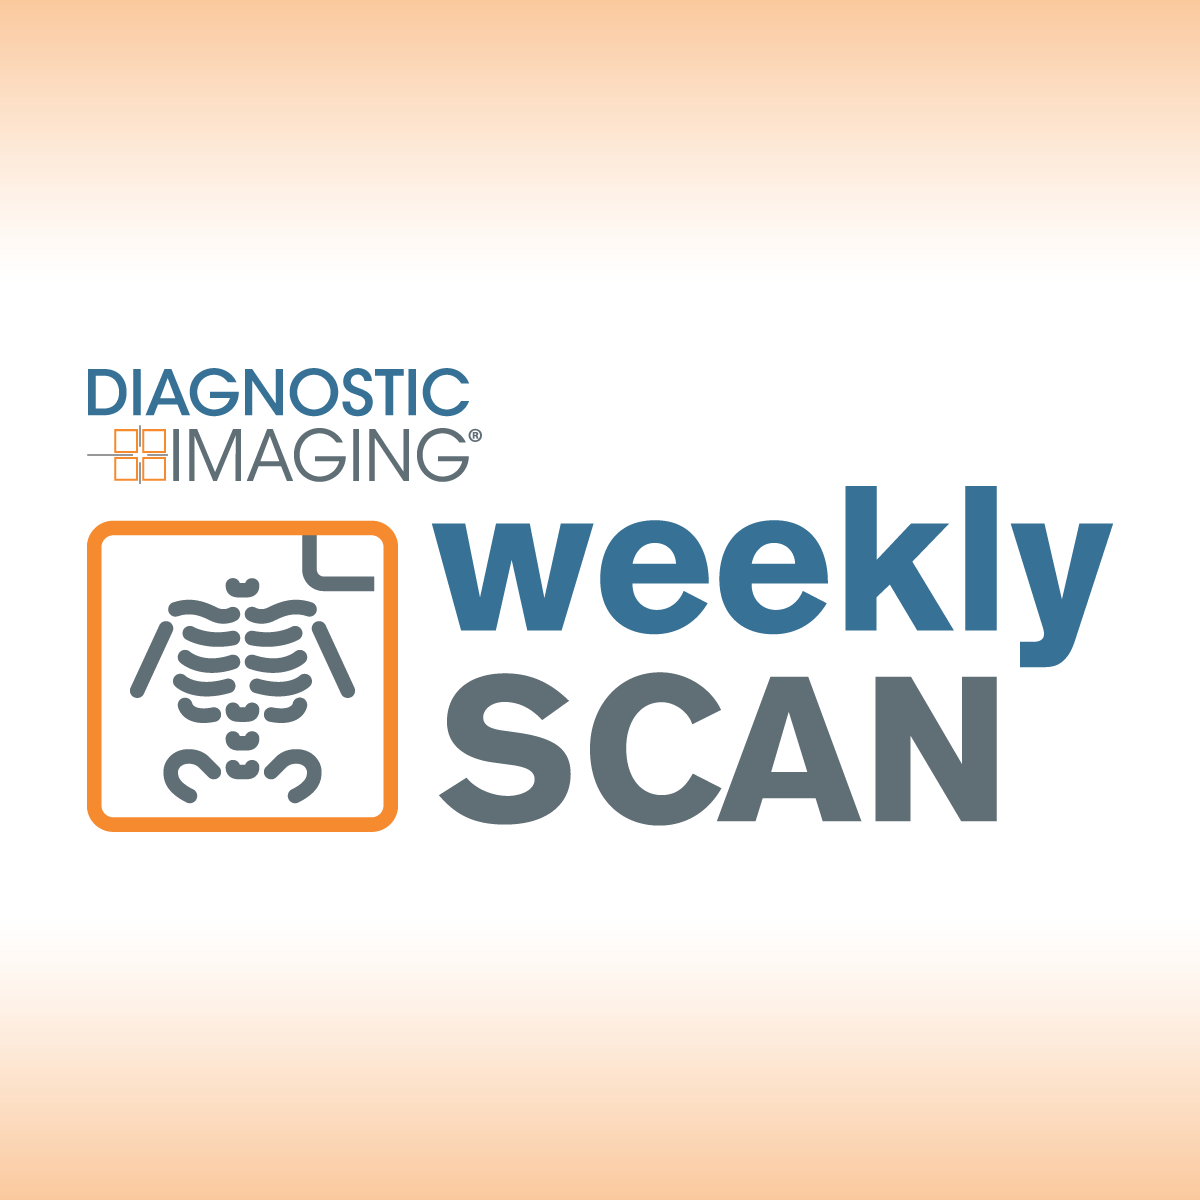 Diagnostic Imaging's Weekly Scan: October 1-October 7